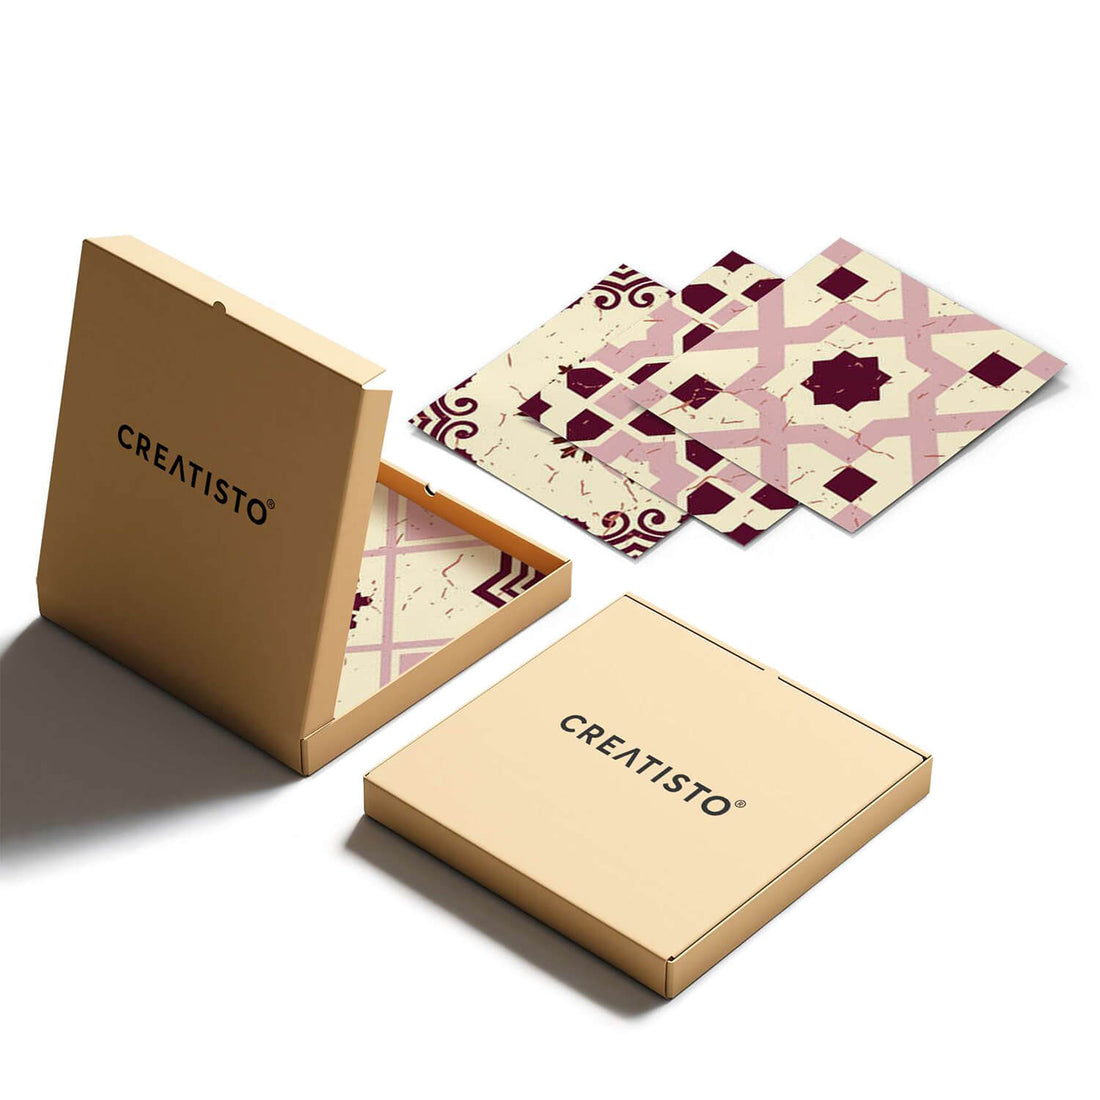 Klebefliesen Mediterranean Tile Set - Red Purple - Paket - creatisto pds2